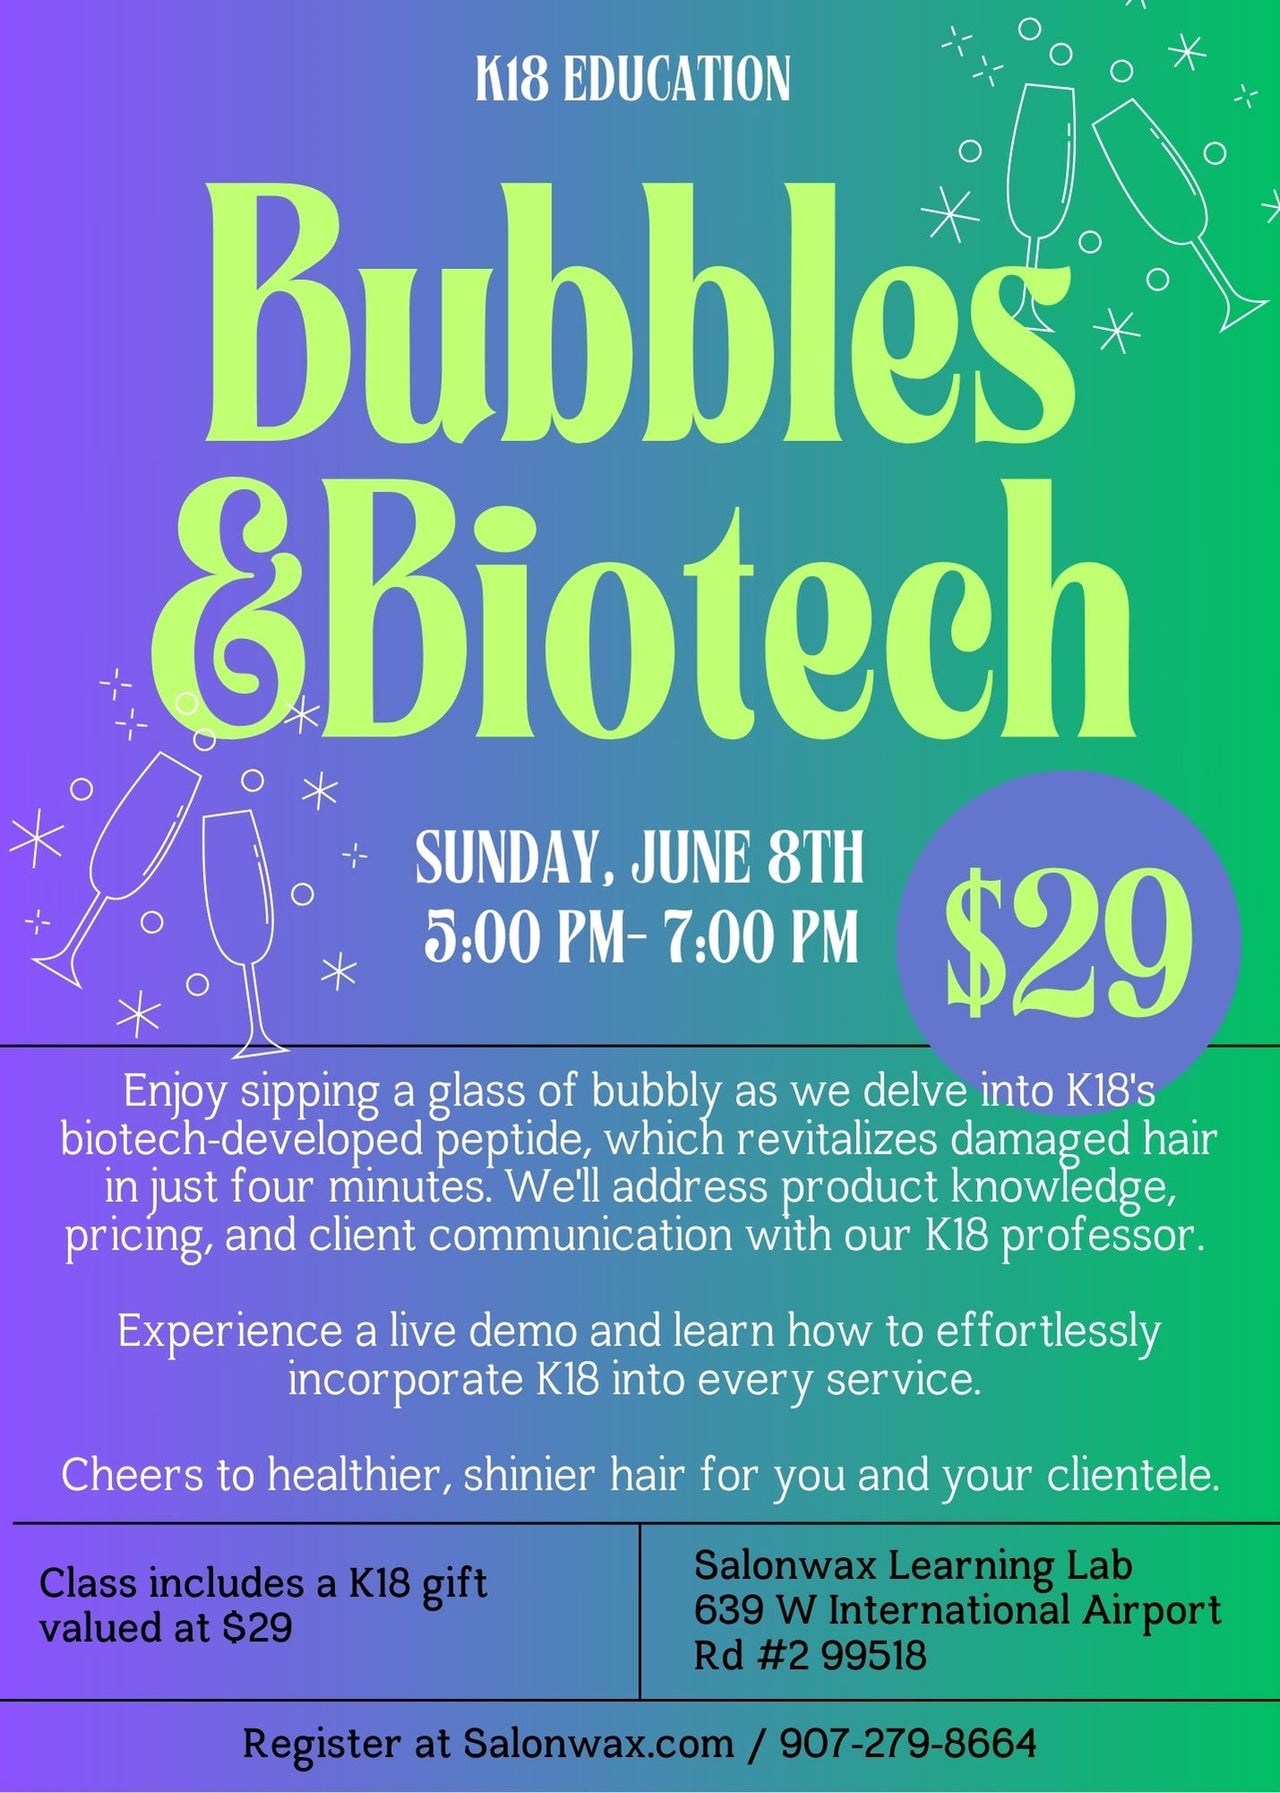 Bubbles & Biotech